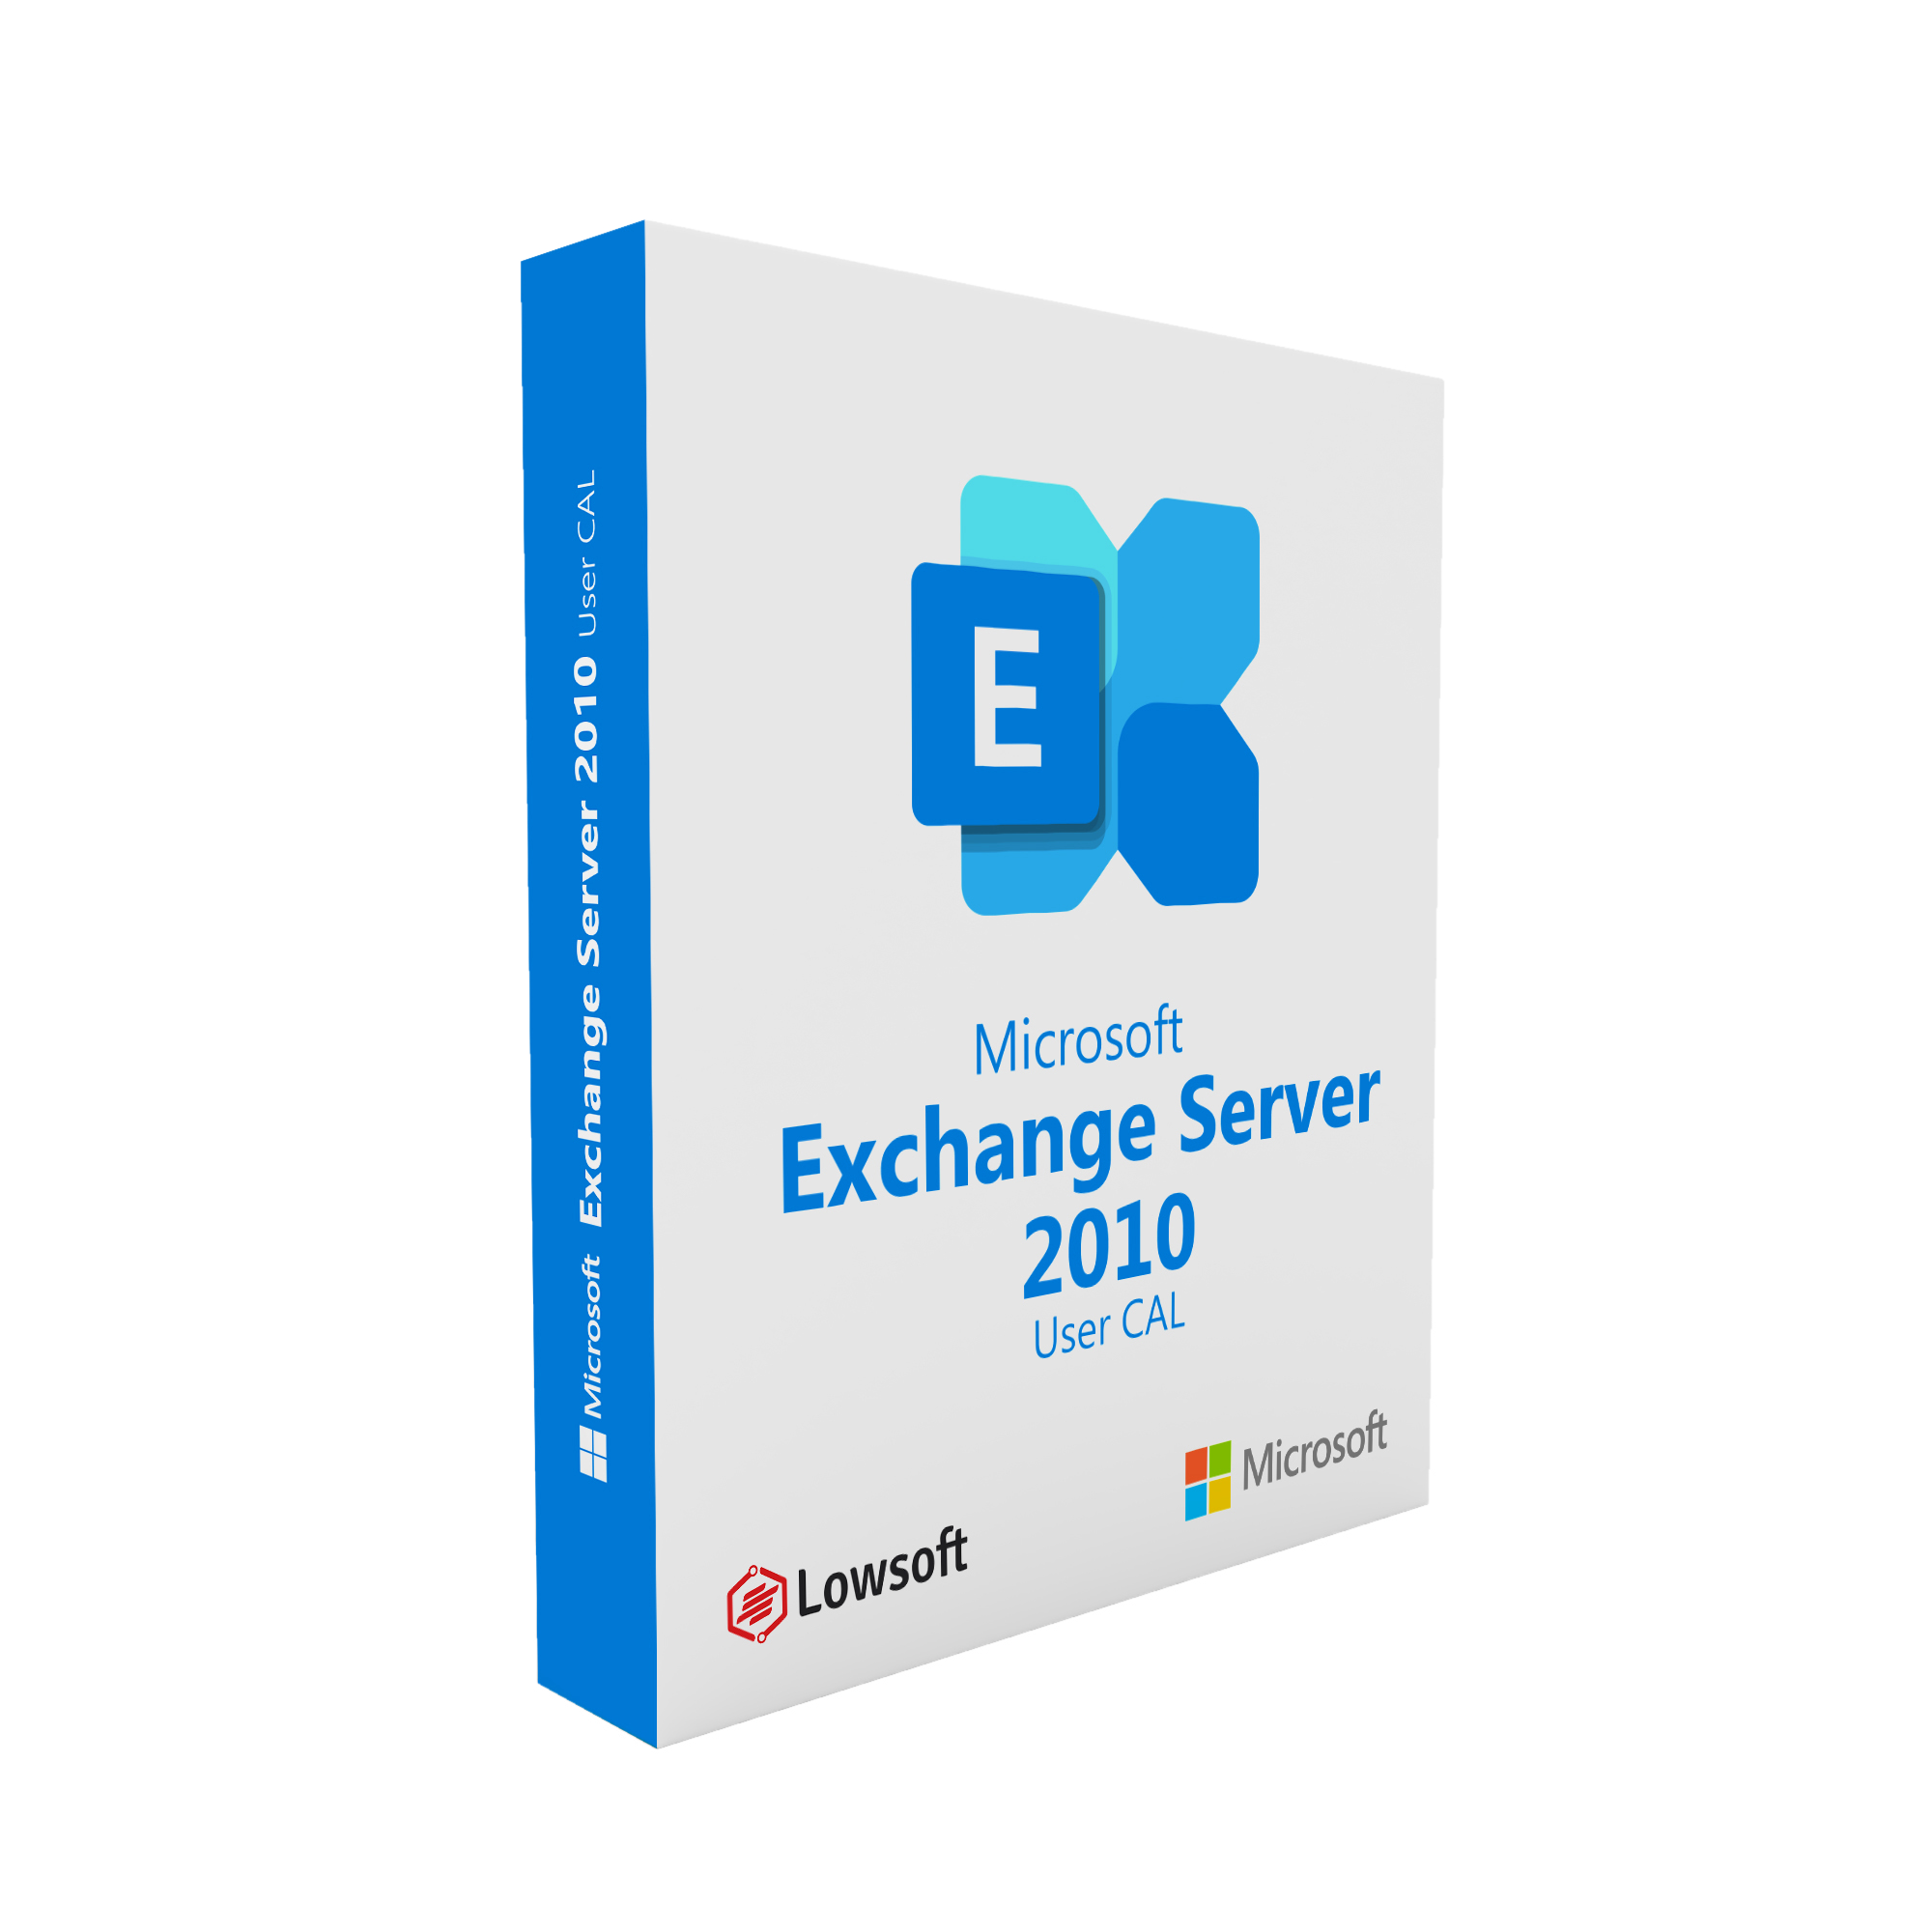 Exchange Server 2010 User CAL